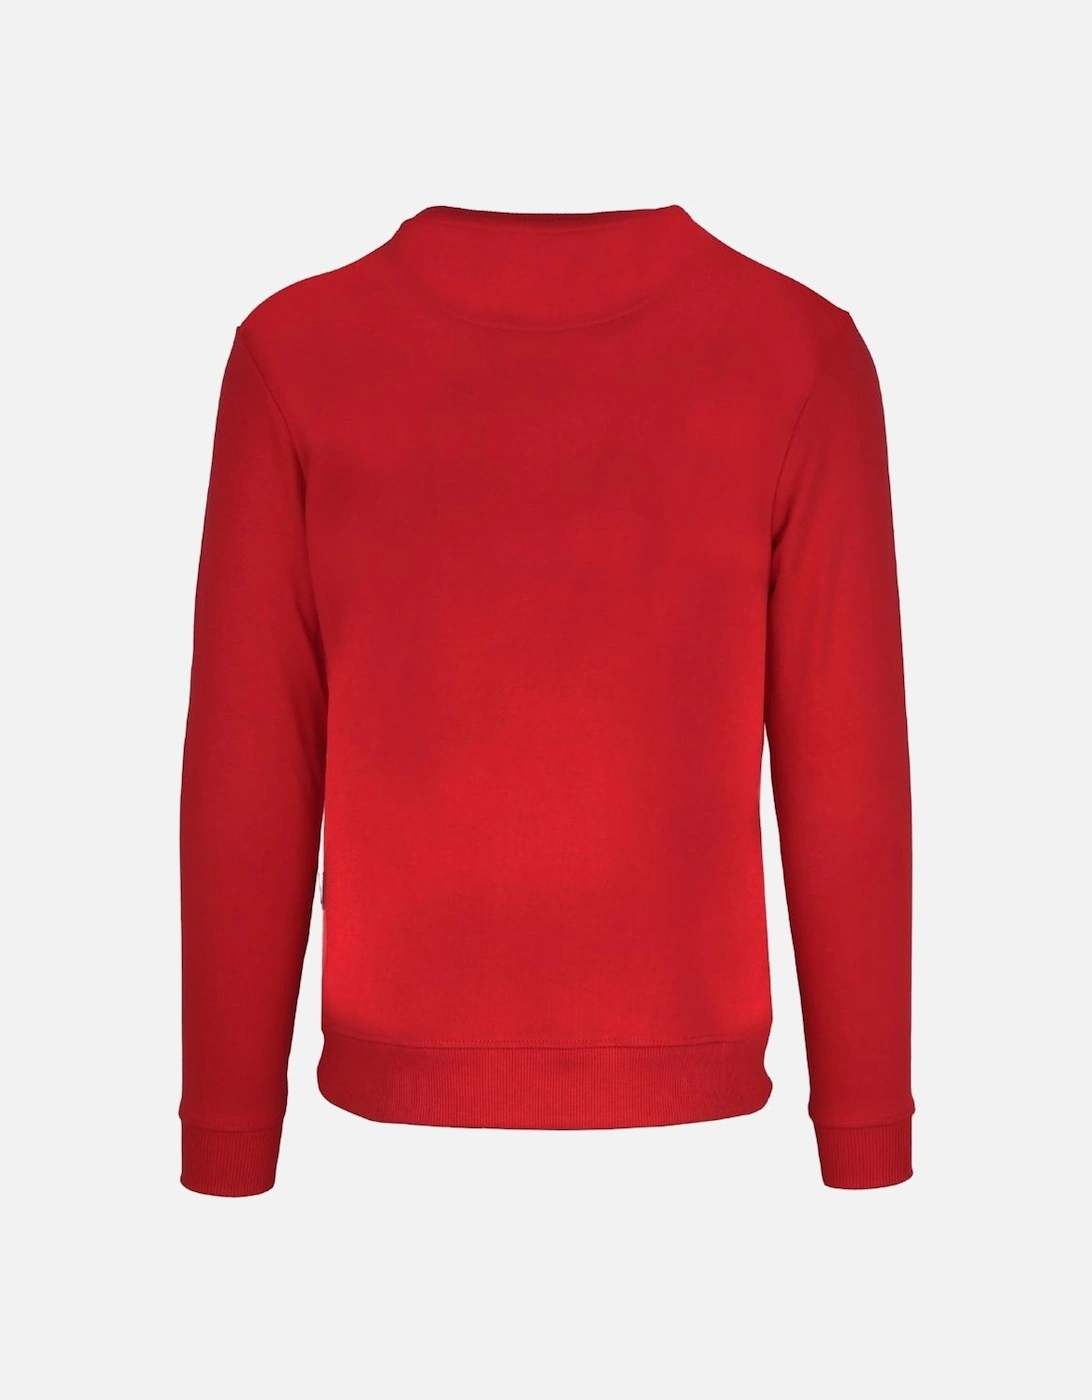 Bold London Logo Red Sweatshirt